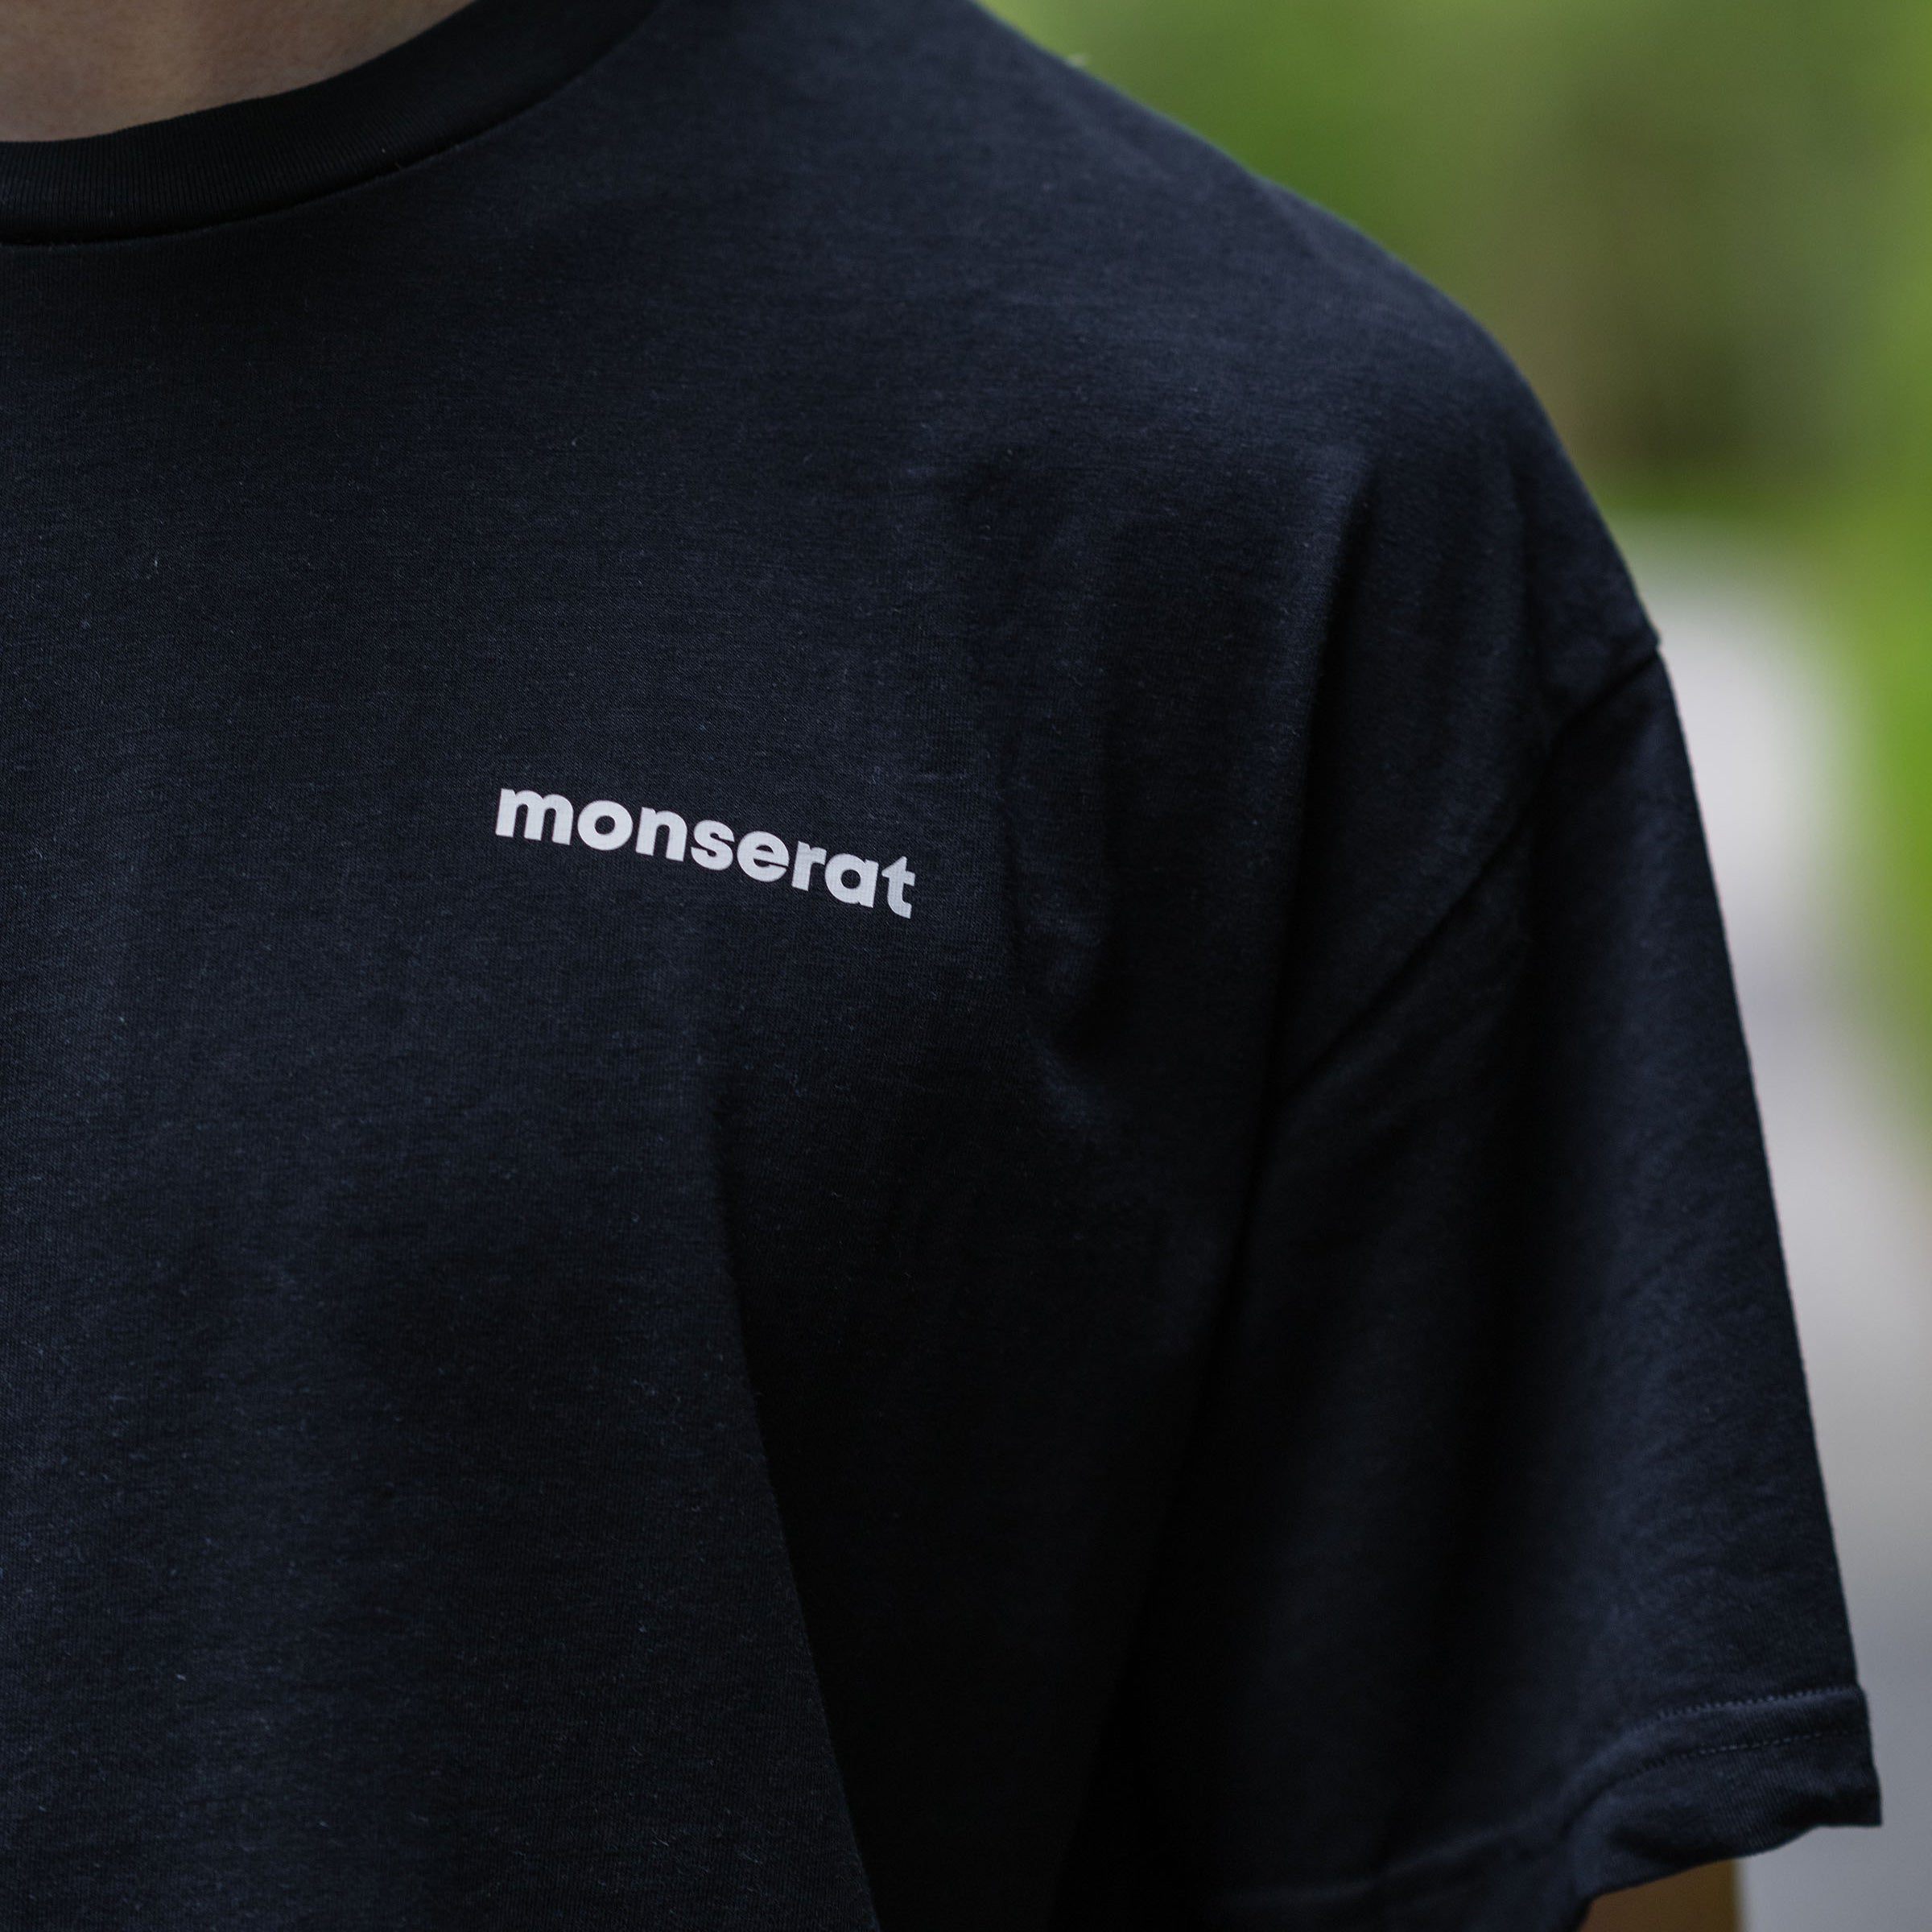 monserat-STS01-organic-t-shirt-detail02.jpg